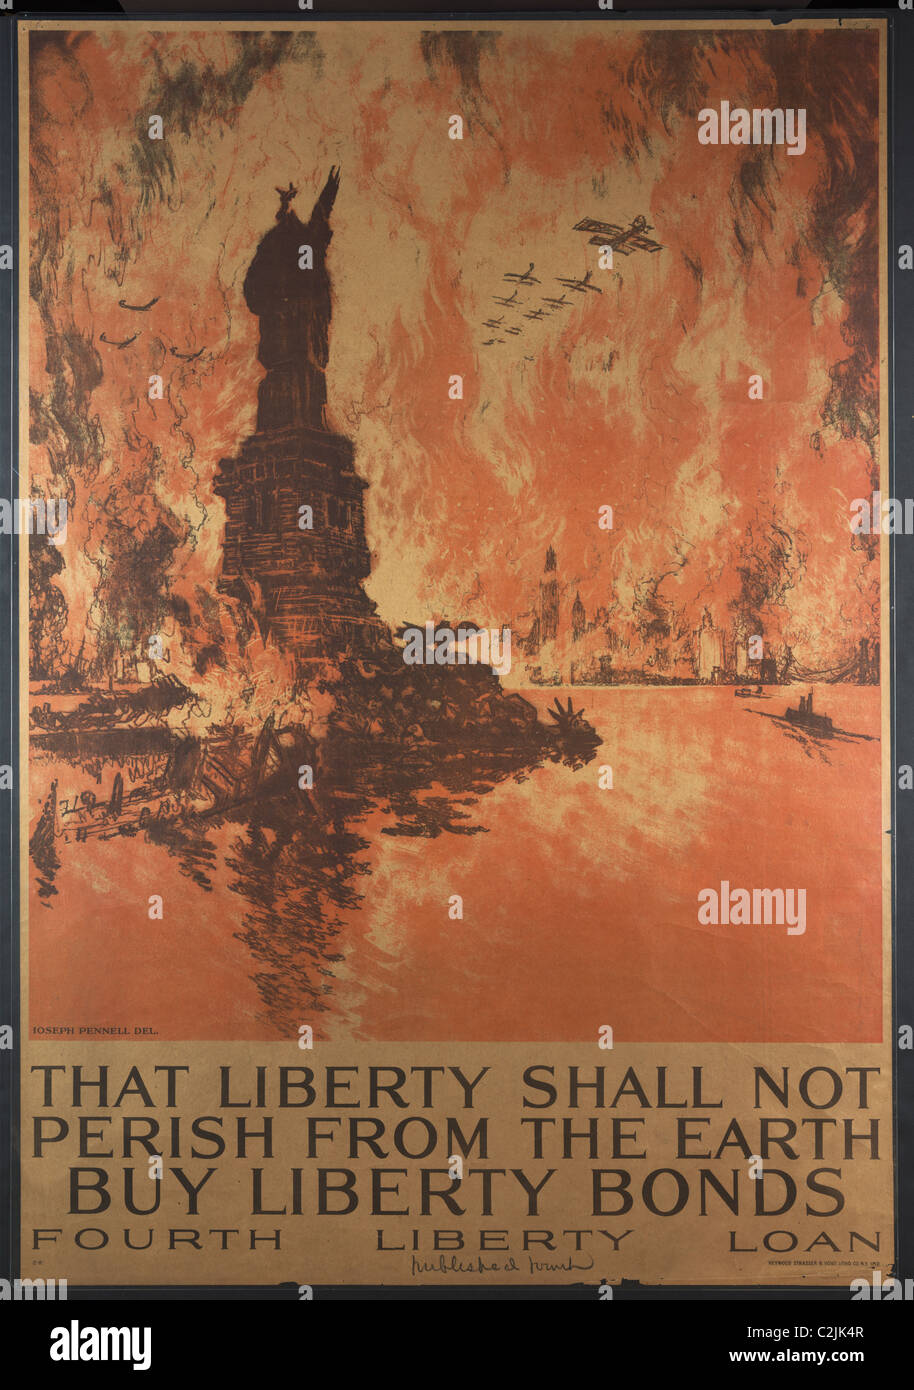 That liberty shall not perish from the earth - Buy liberty bonds Fourth Liberty Loan Stock Photo